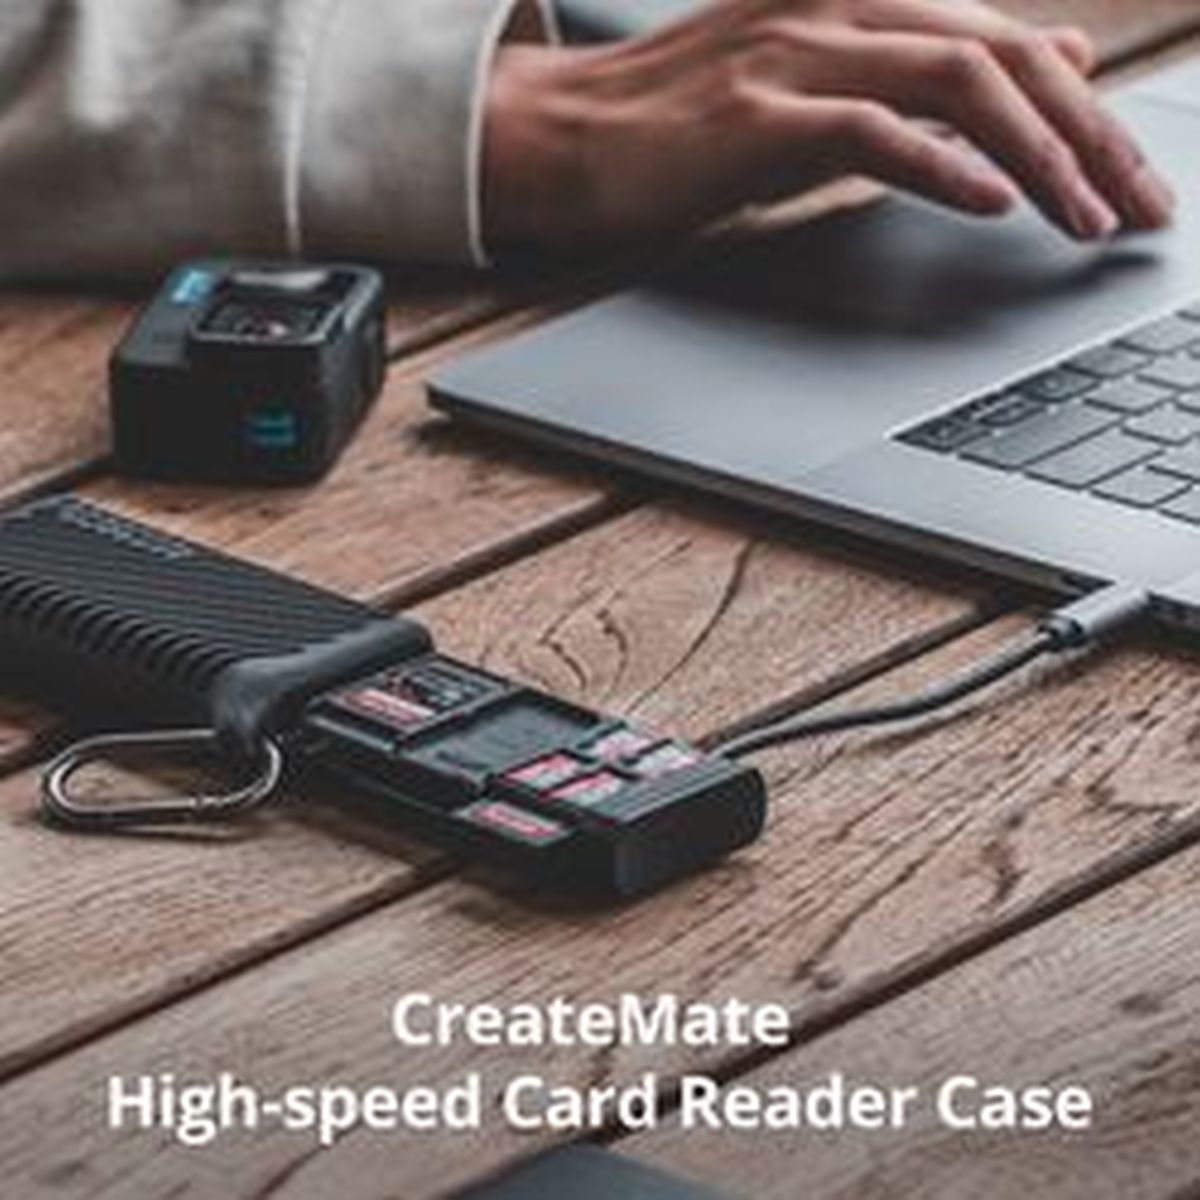 PGYTECH CreateMate High-speed Card Reader Case